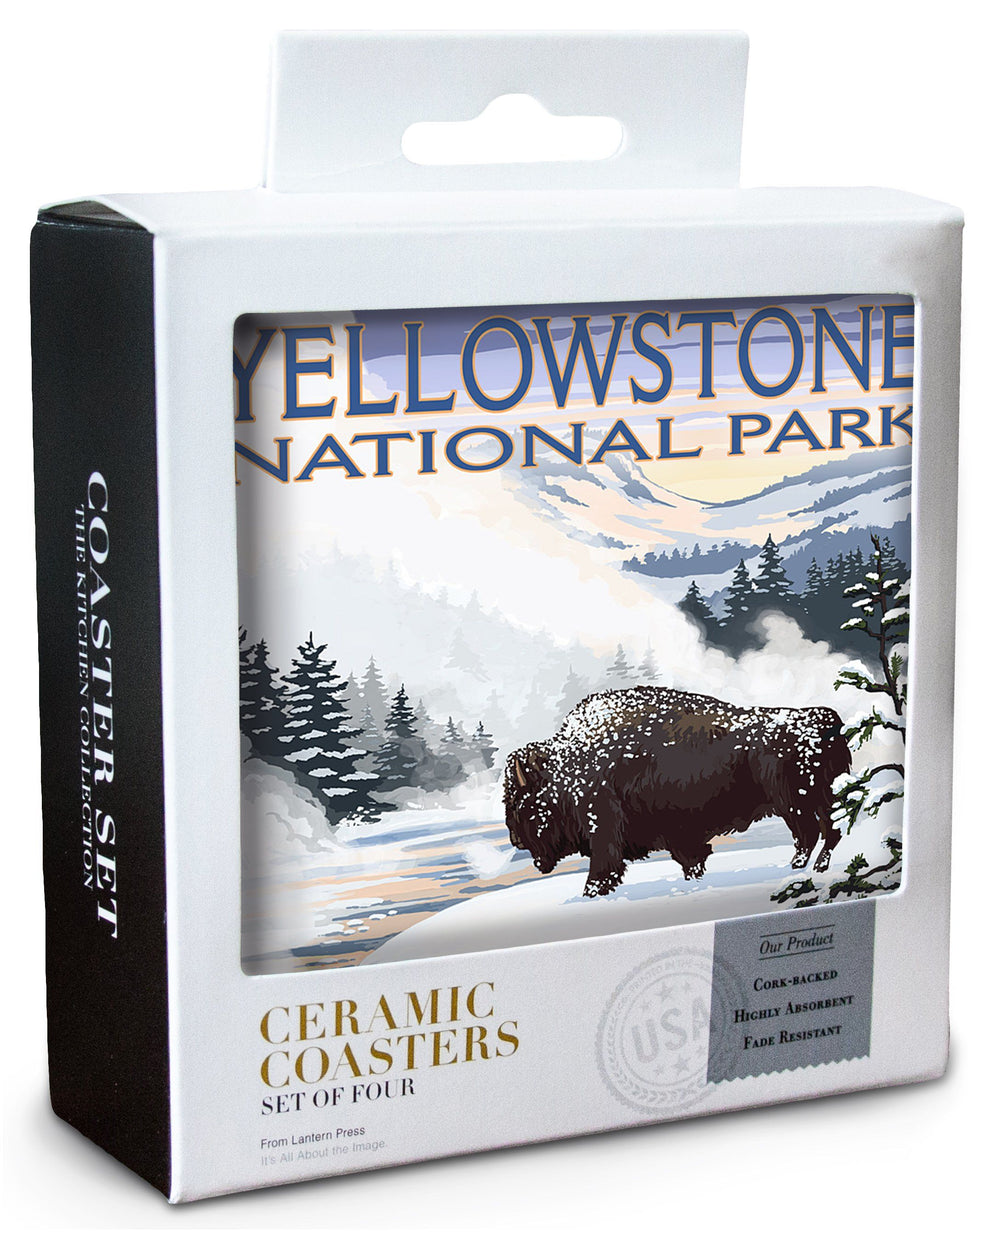 Yellowstone National Park, Wyoming, Bison Snow Scene, Lantern Press Artwork, Coaster Set Coasters Lantern Press 